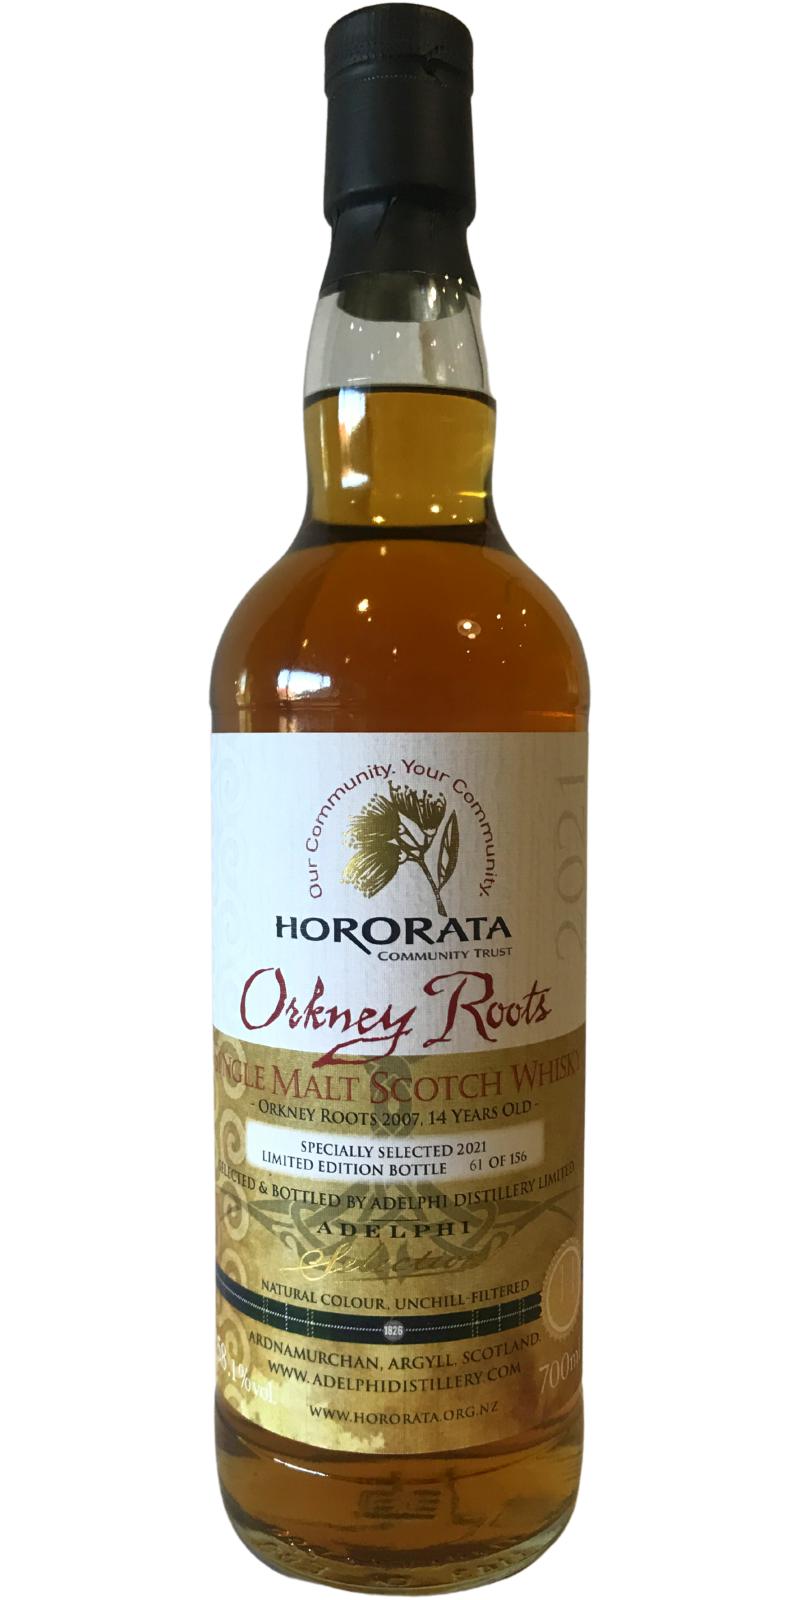 Orkney Roots 2007 AD Hororata Community Trust 58.1% 700ml